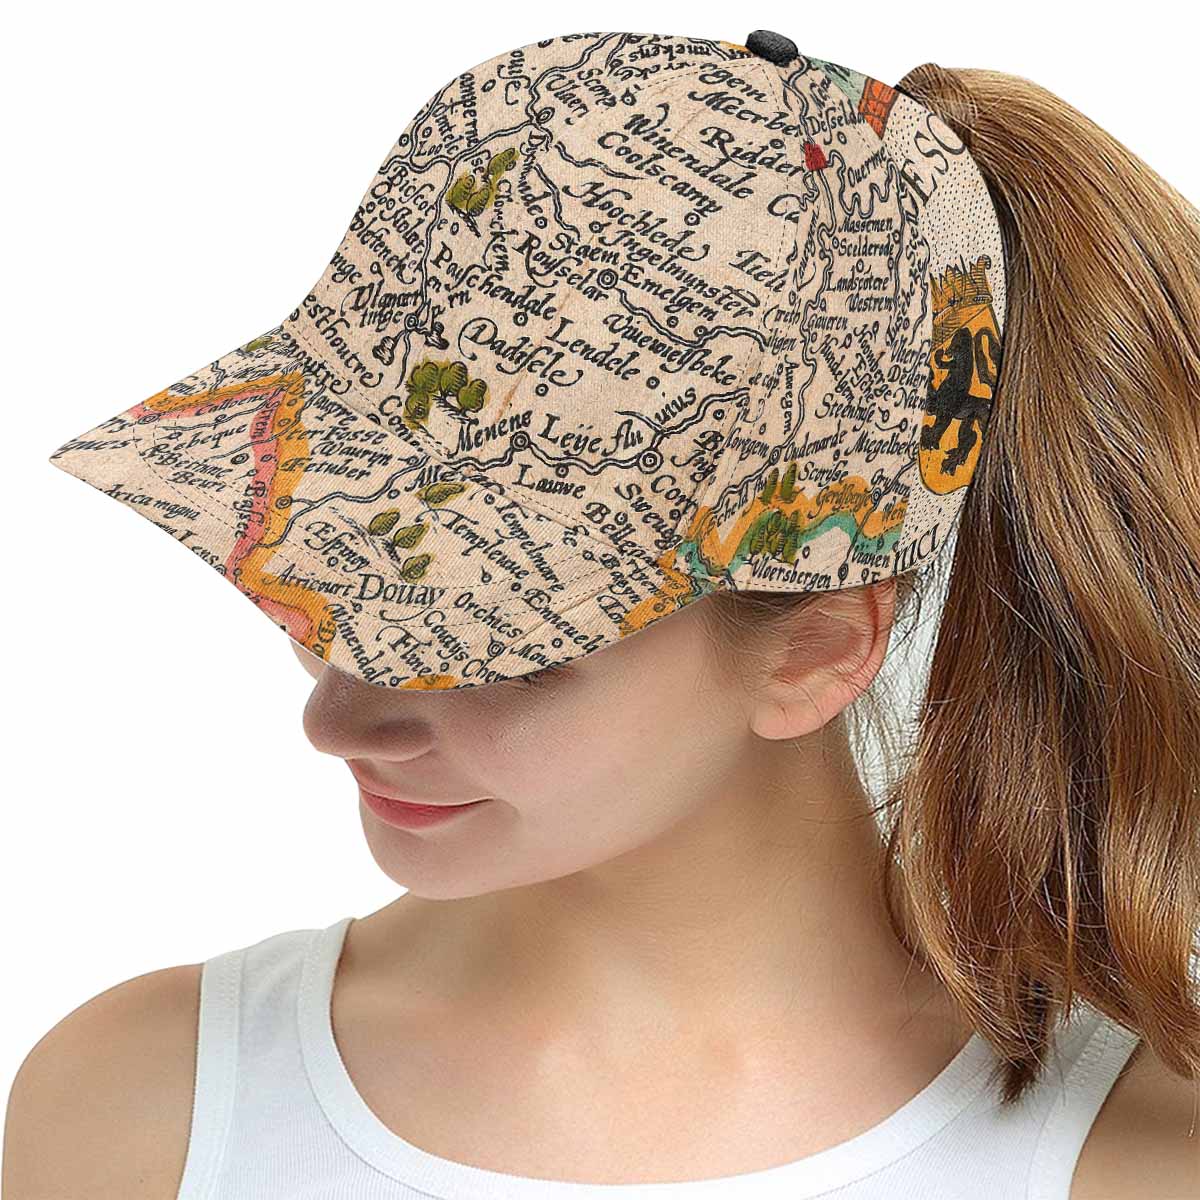 Antique Map design mens or womens deep snapback cap, trucker hat, Design 12